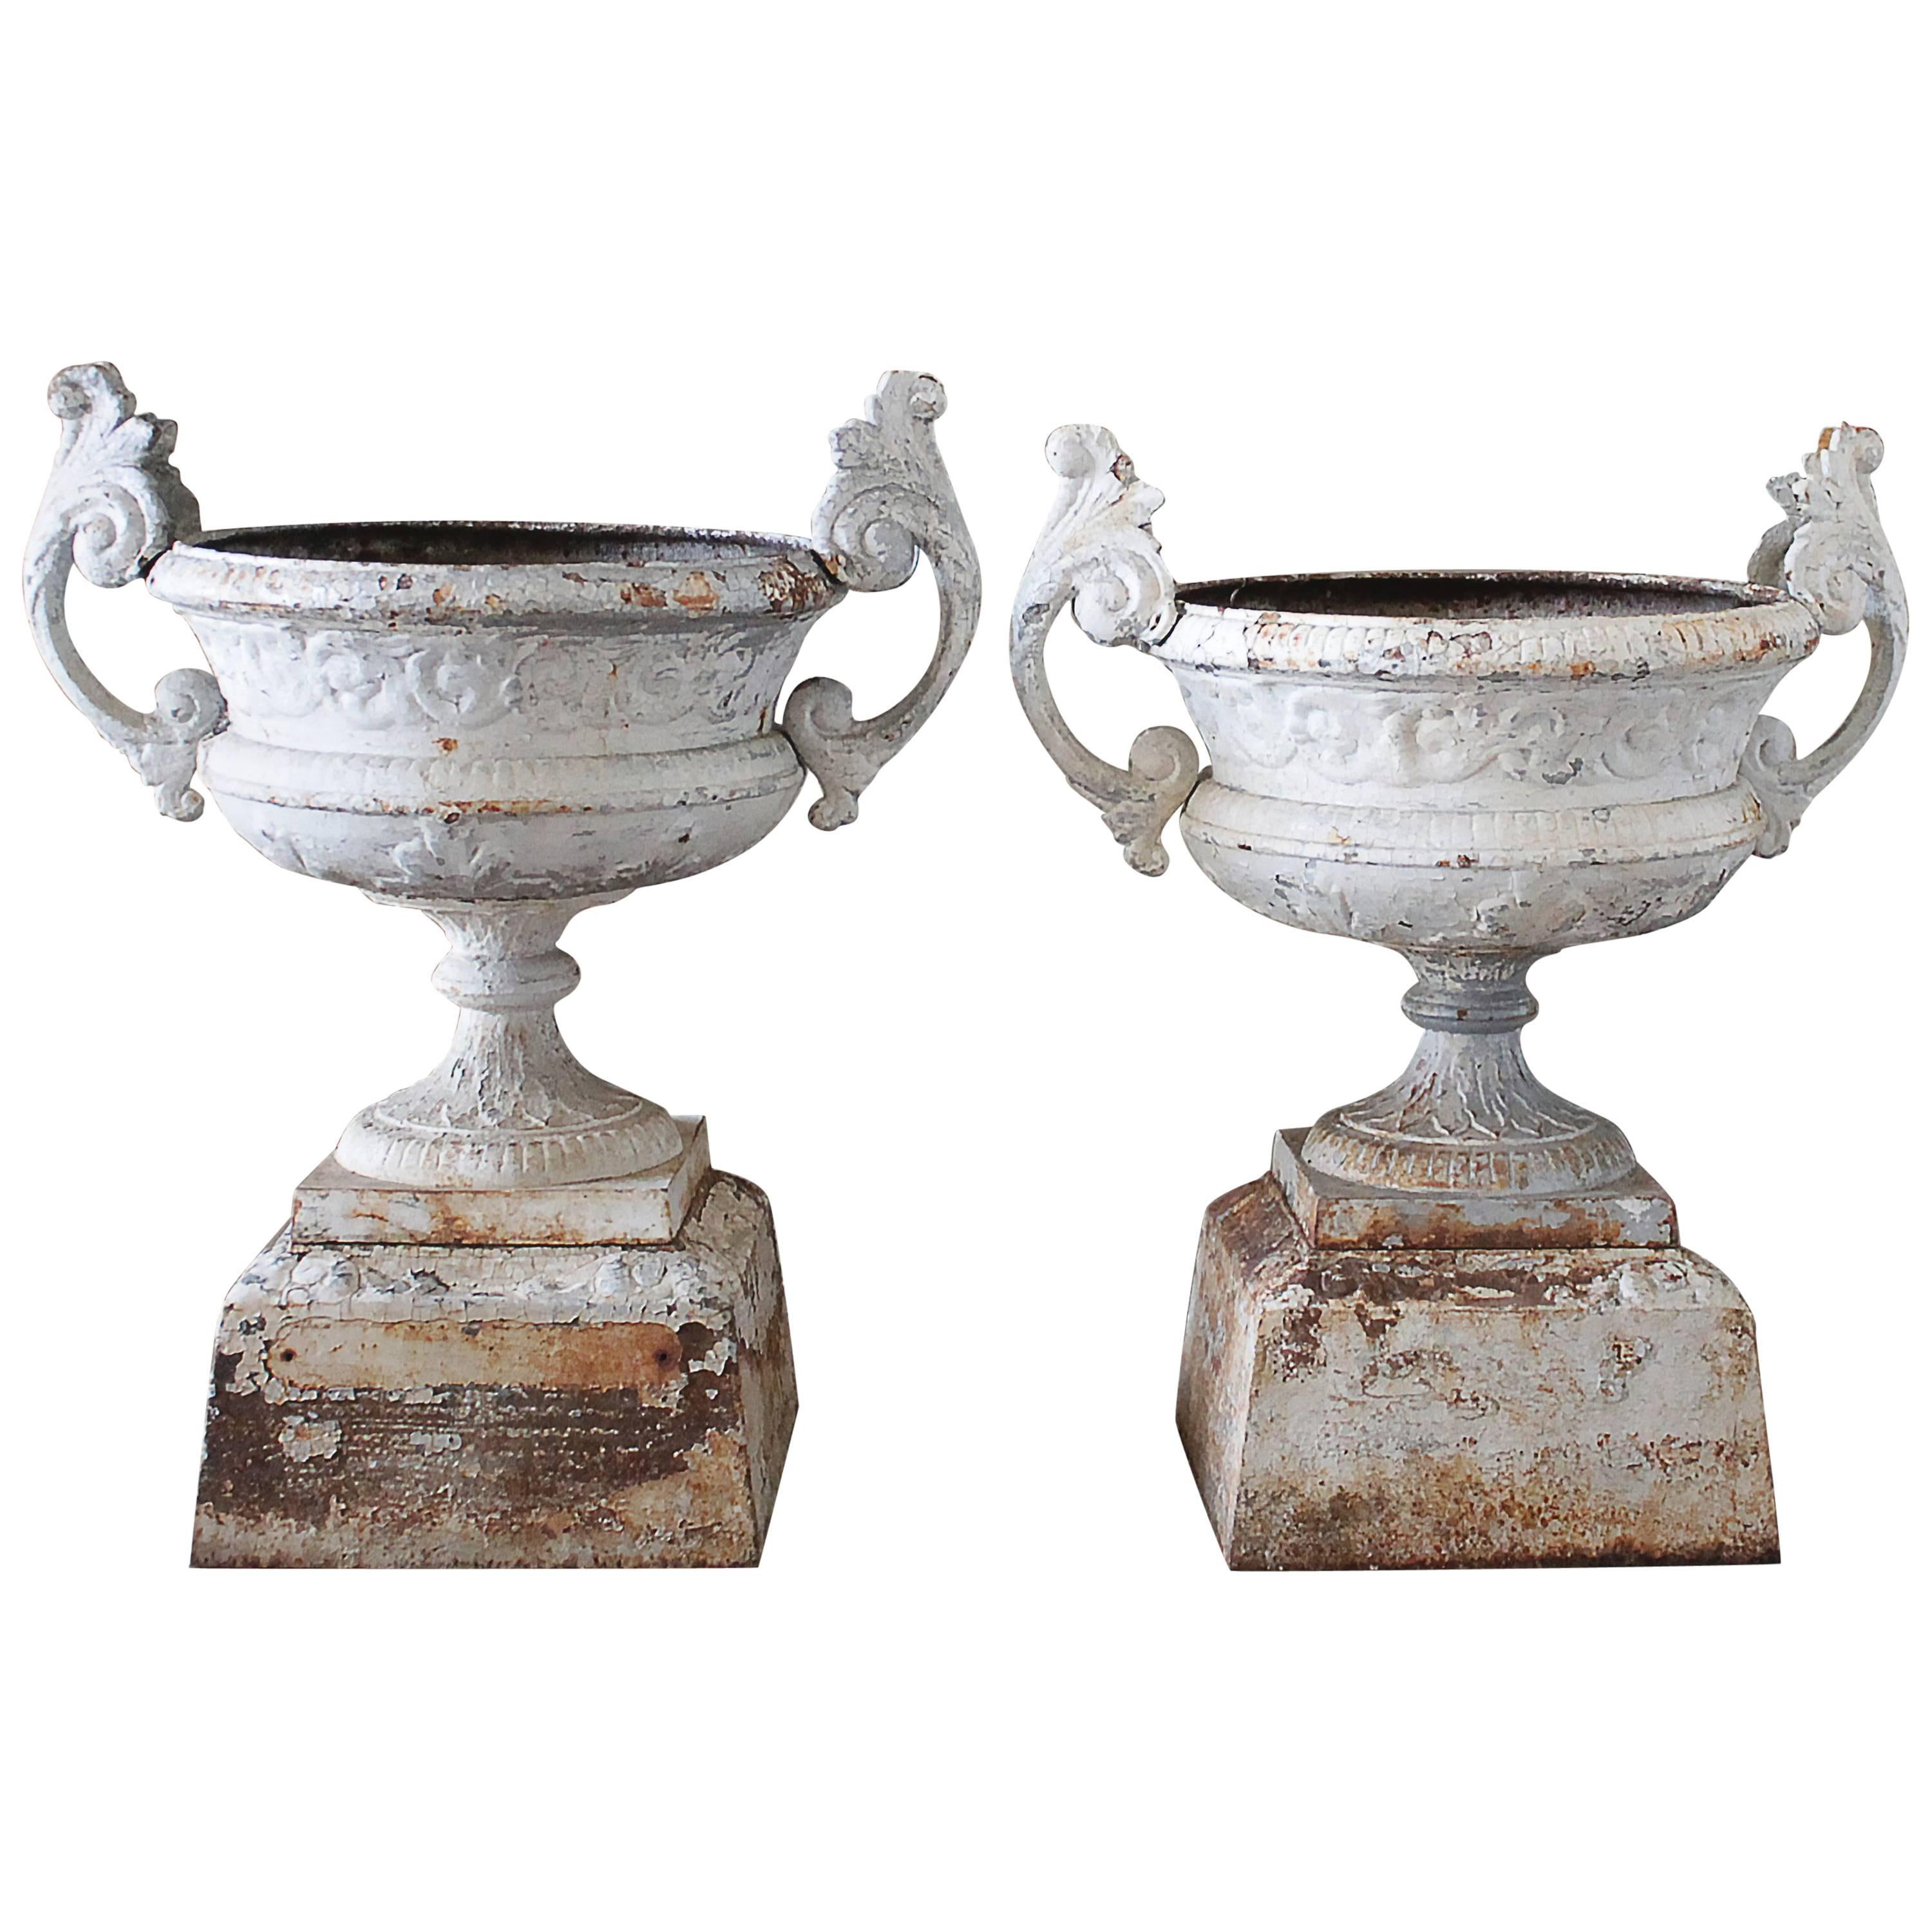 Pair of 19th Century Cast Iron Urns on Pedestals